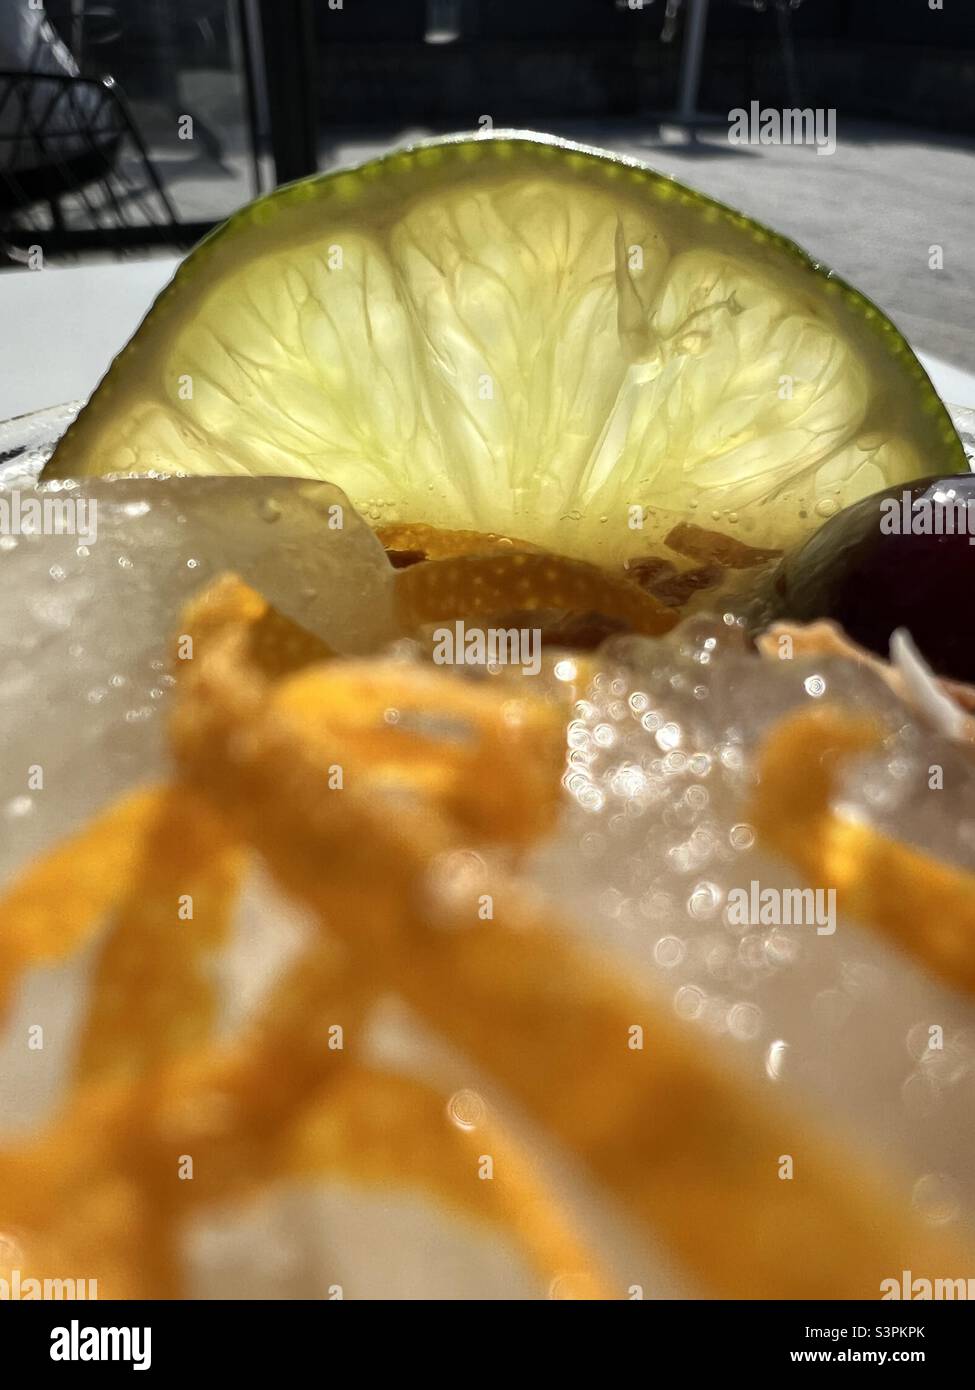 Lime and Orange peel garnish on ice Stock Photo